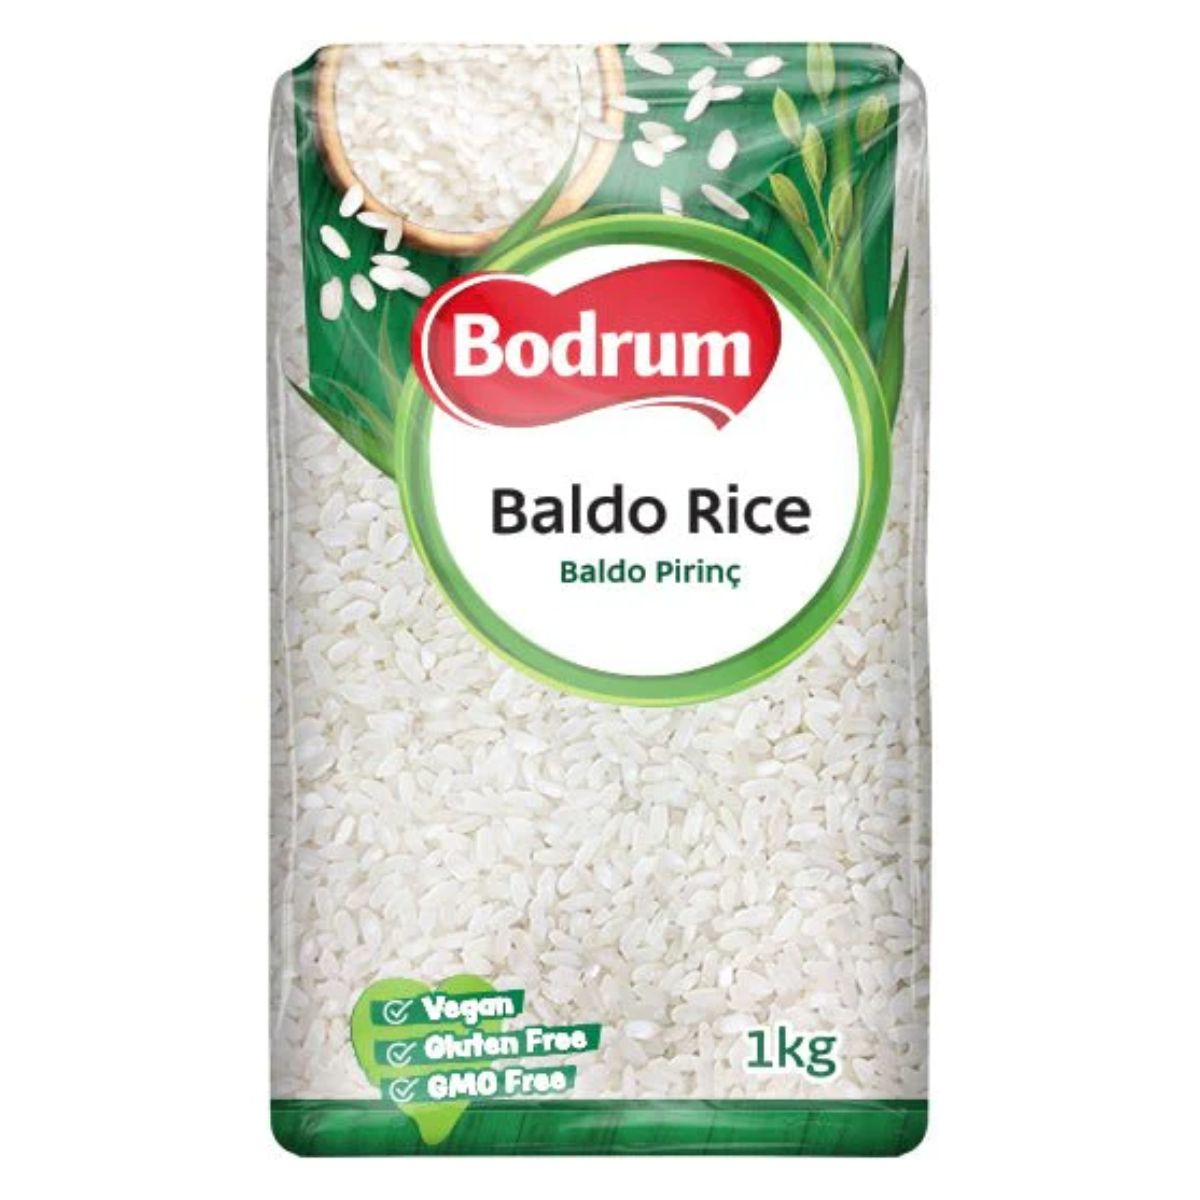 Bodrum - Baldo Rice - 1kg.